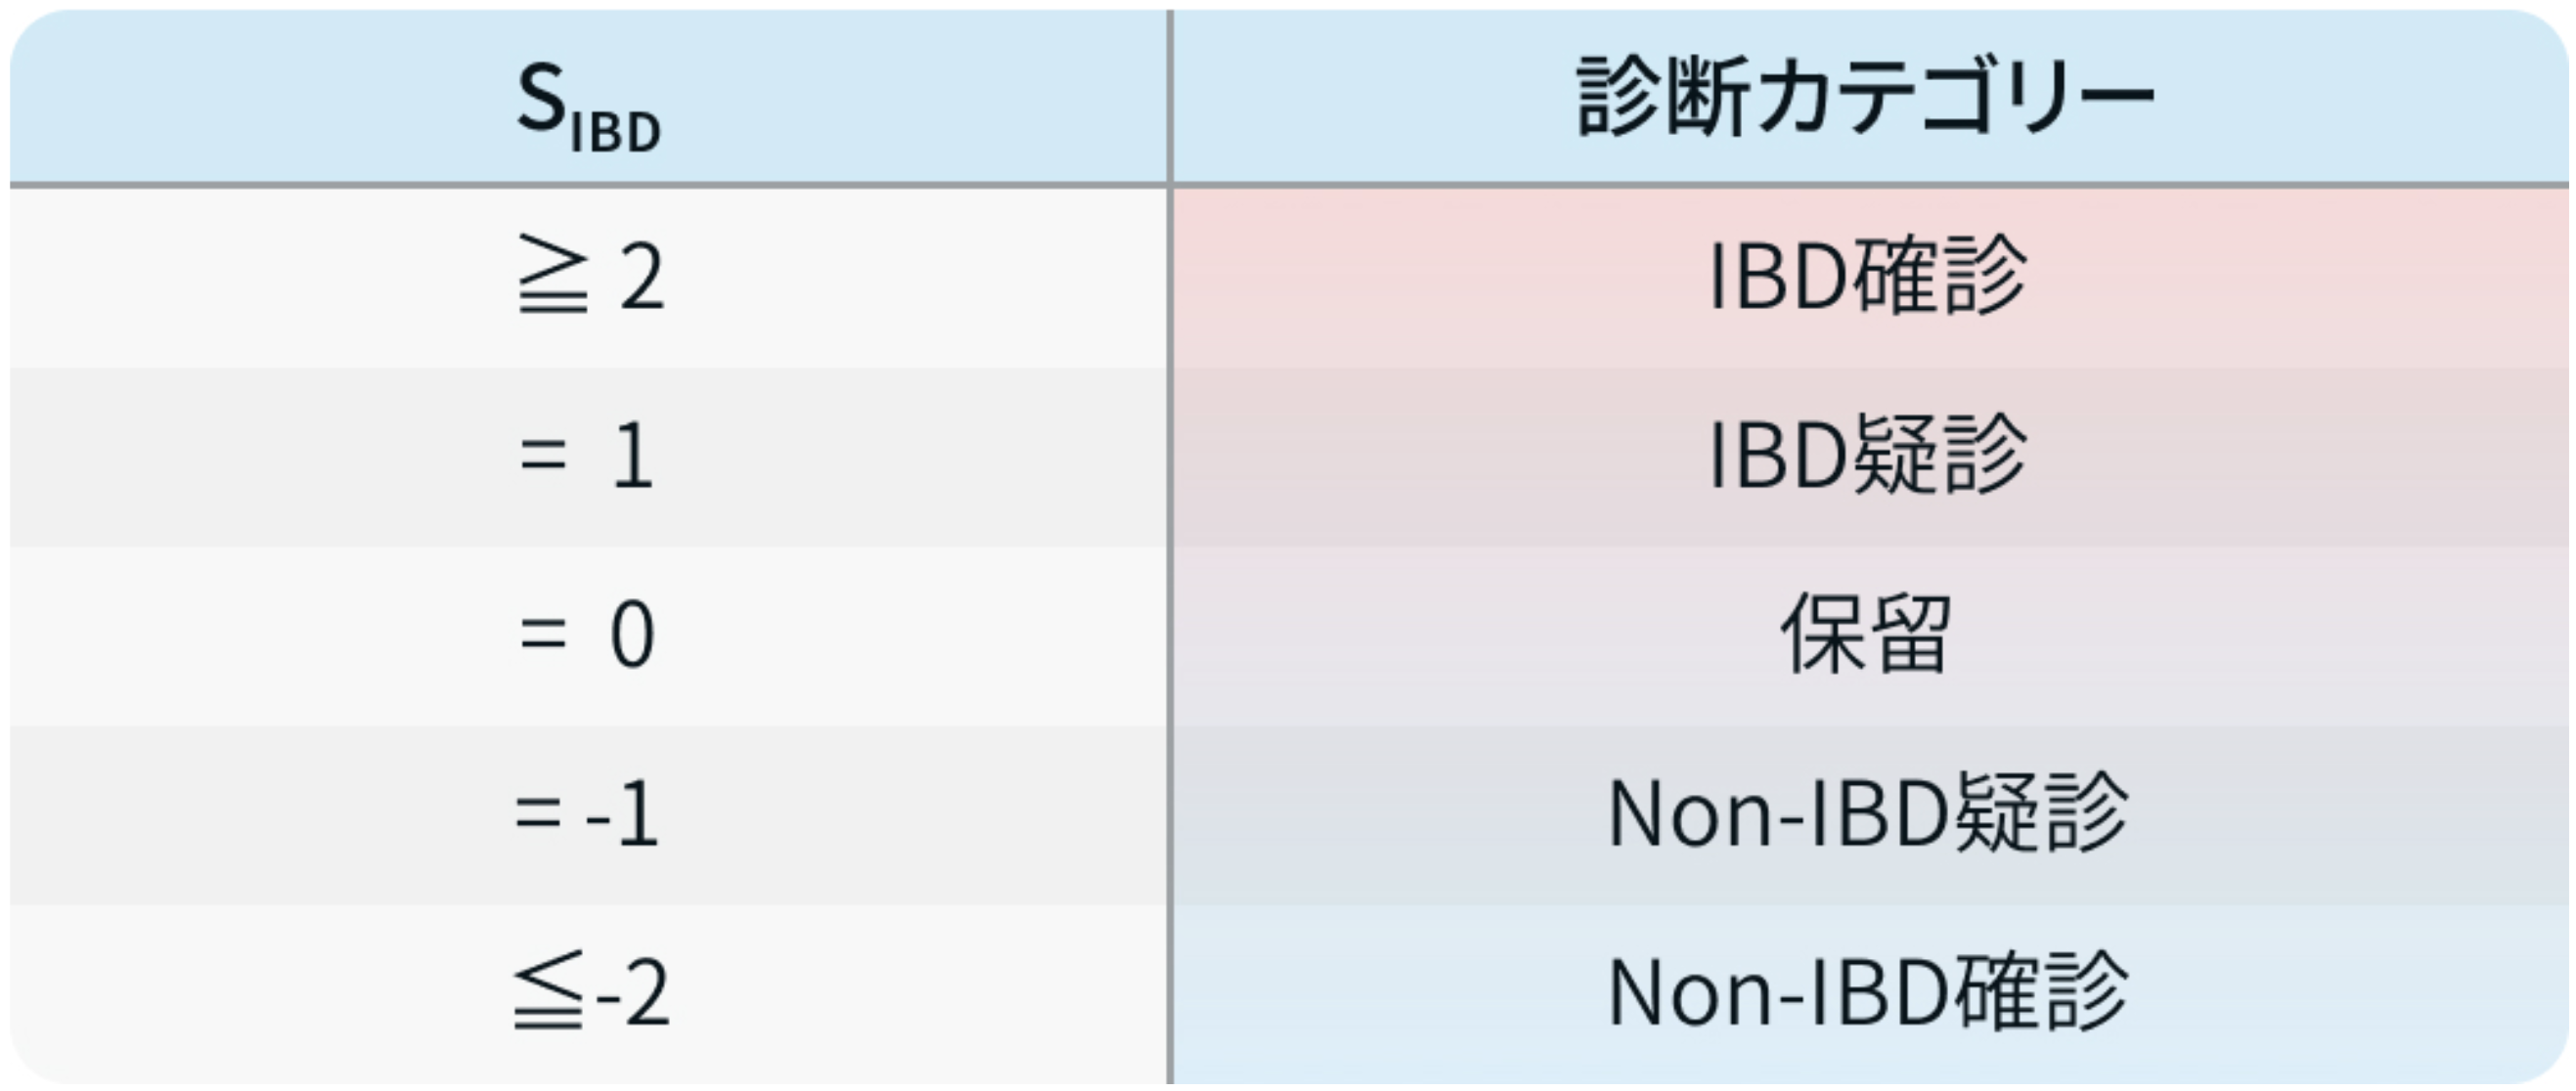 【IBDマニュアル】IBDの病理診断 (明本由衣先生)